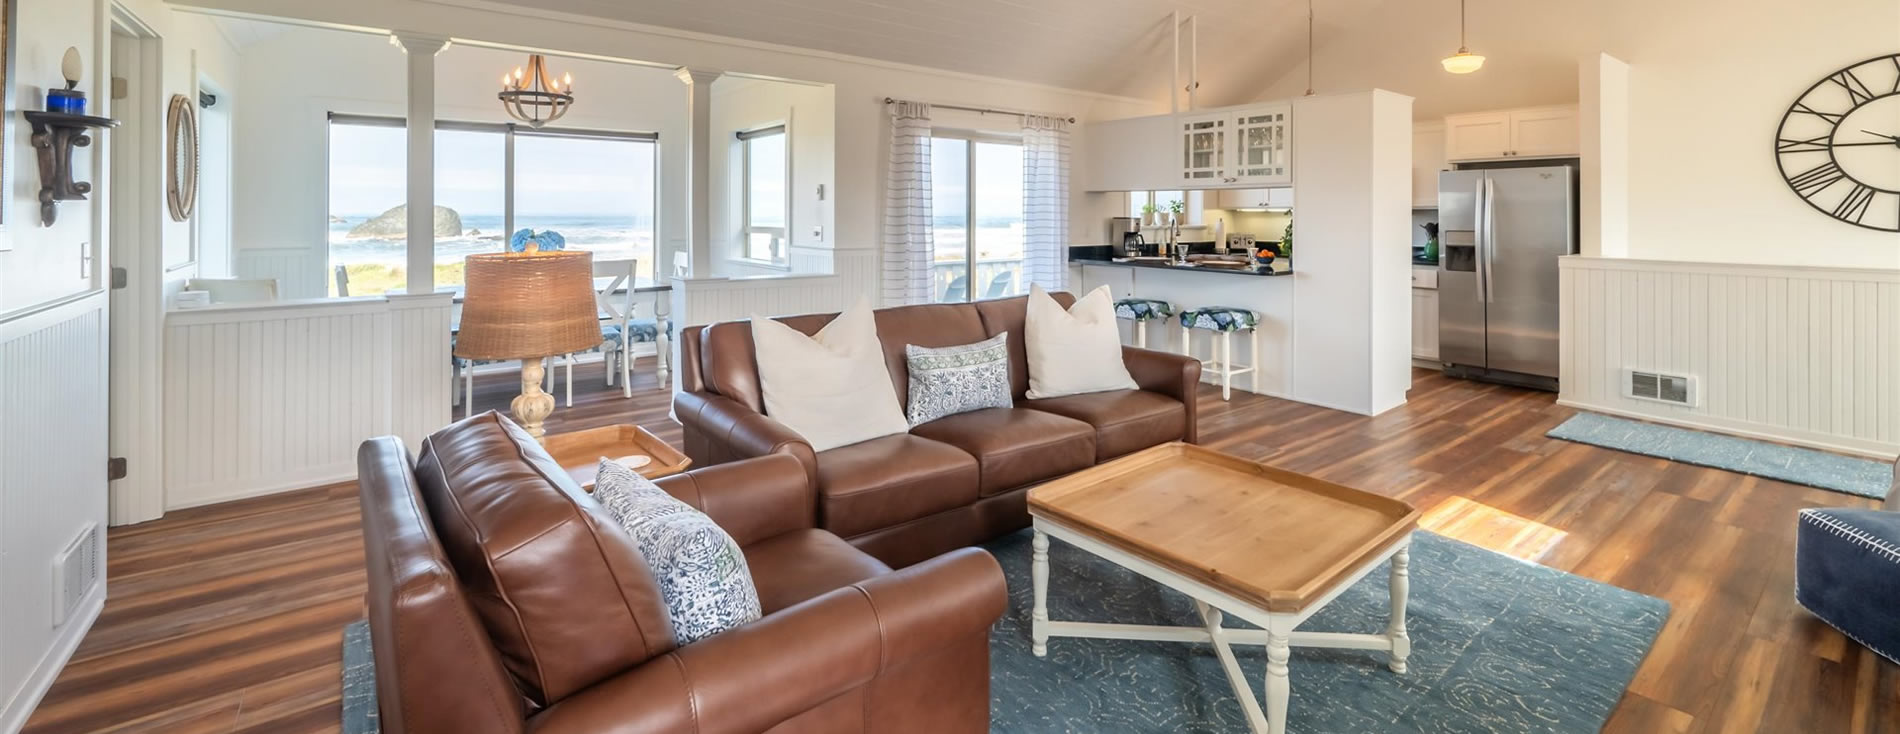 bandon oregon vacation rental living room with ocean views